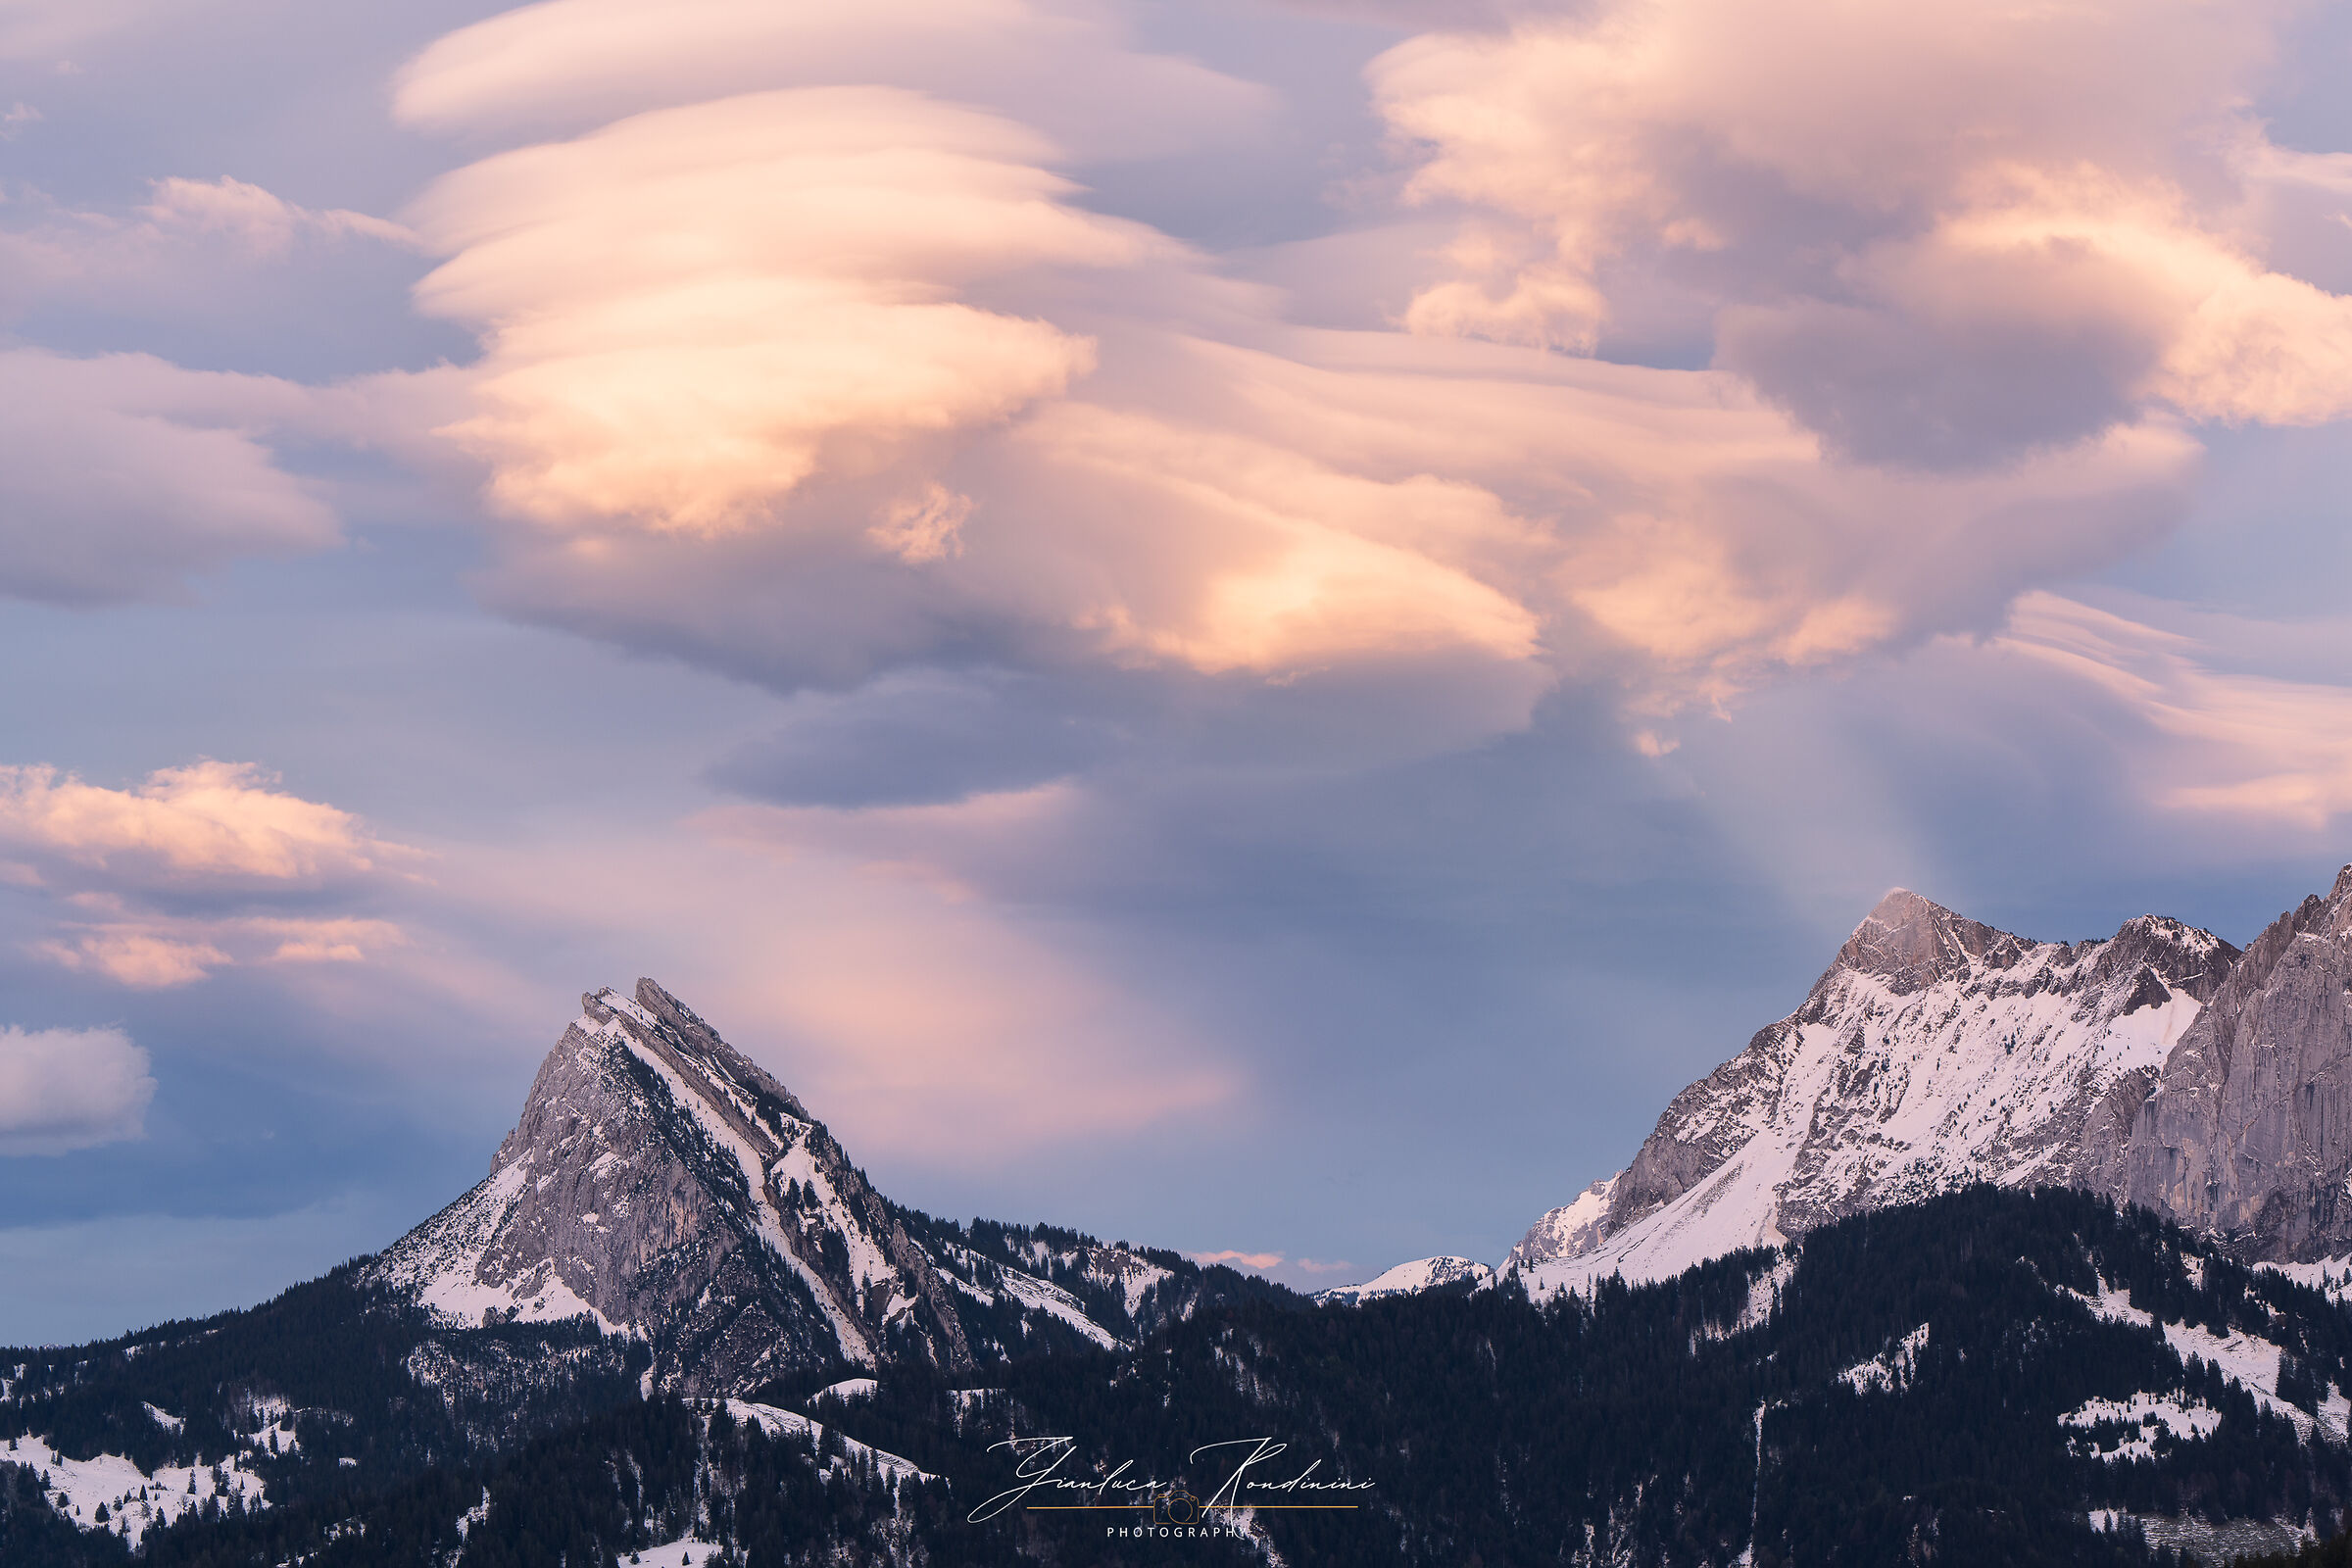 Swiss Alps at sunset...